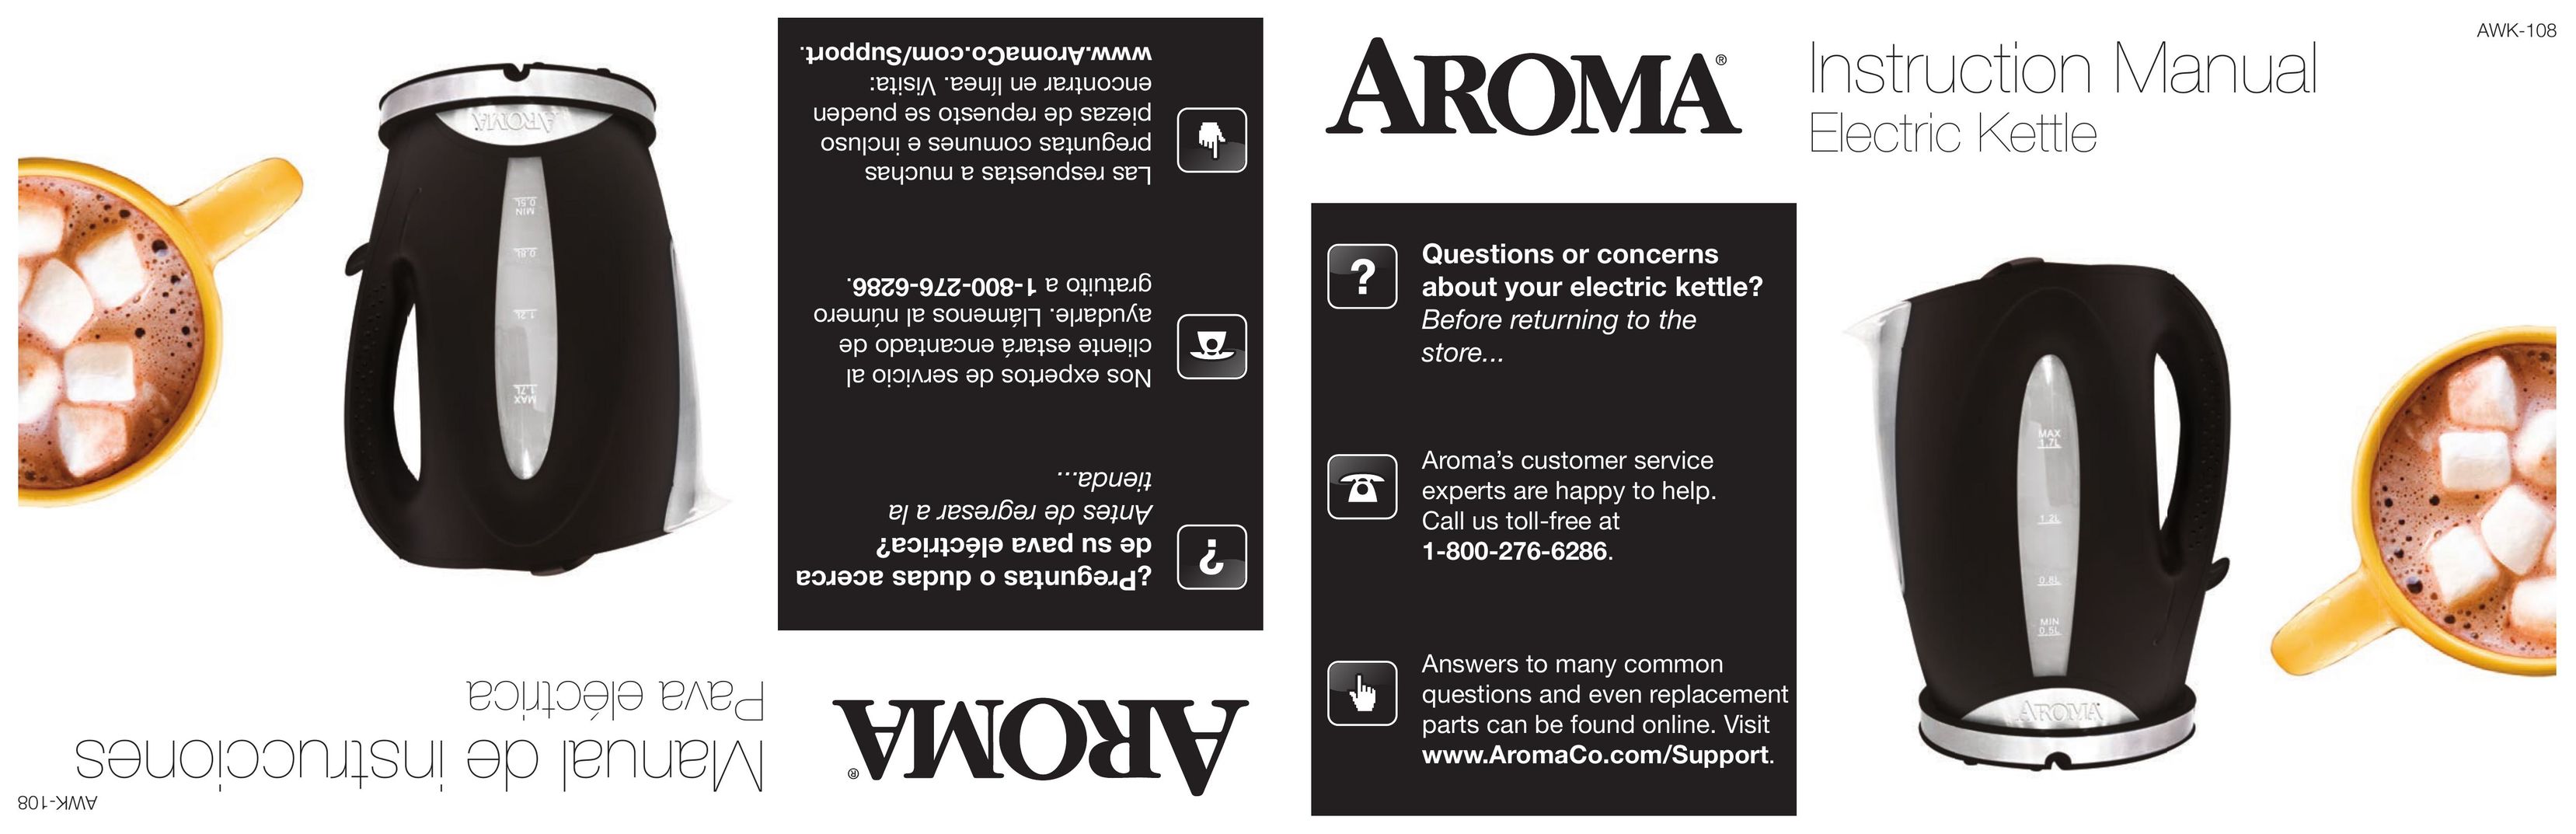 Aroma AWK-108 Hot Beverage Maker User Manual